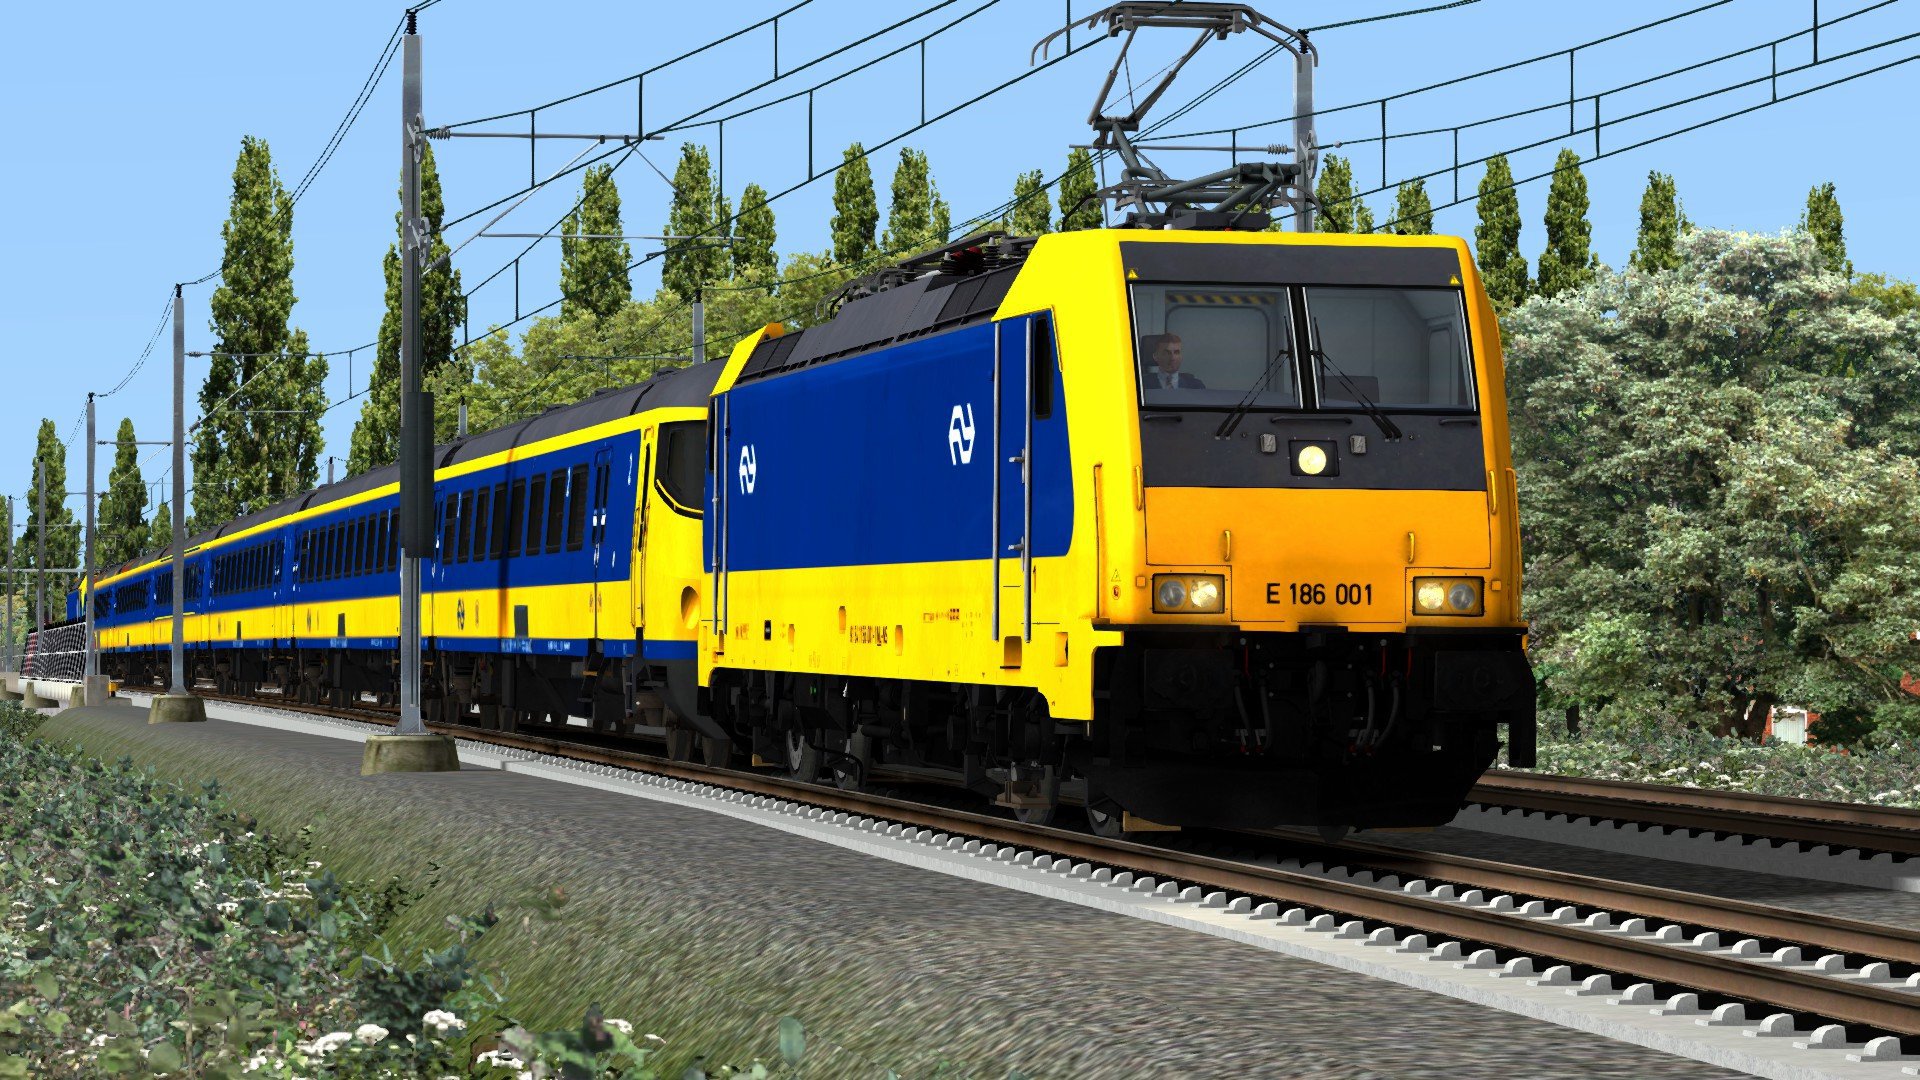 Intercity direct onderweg naar amsterdam.